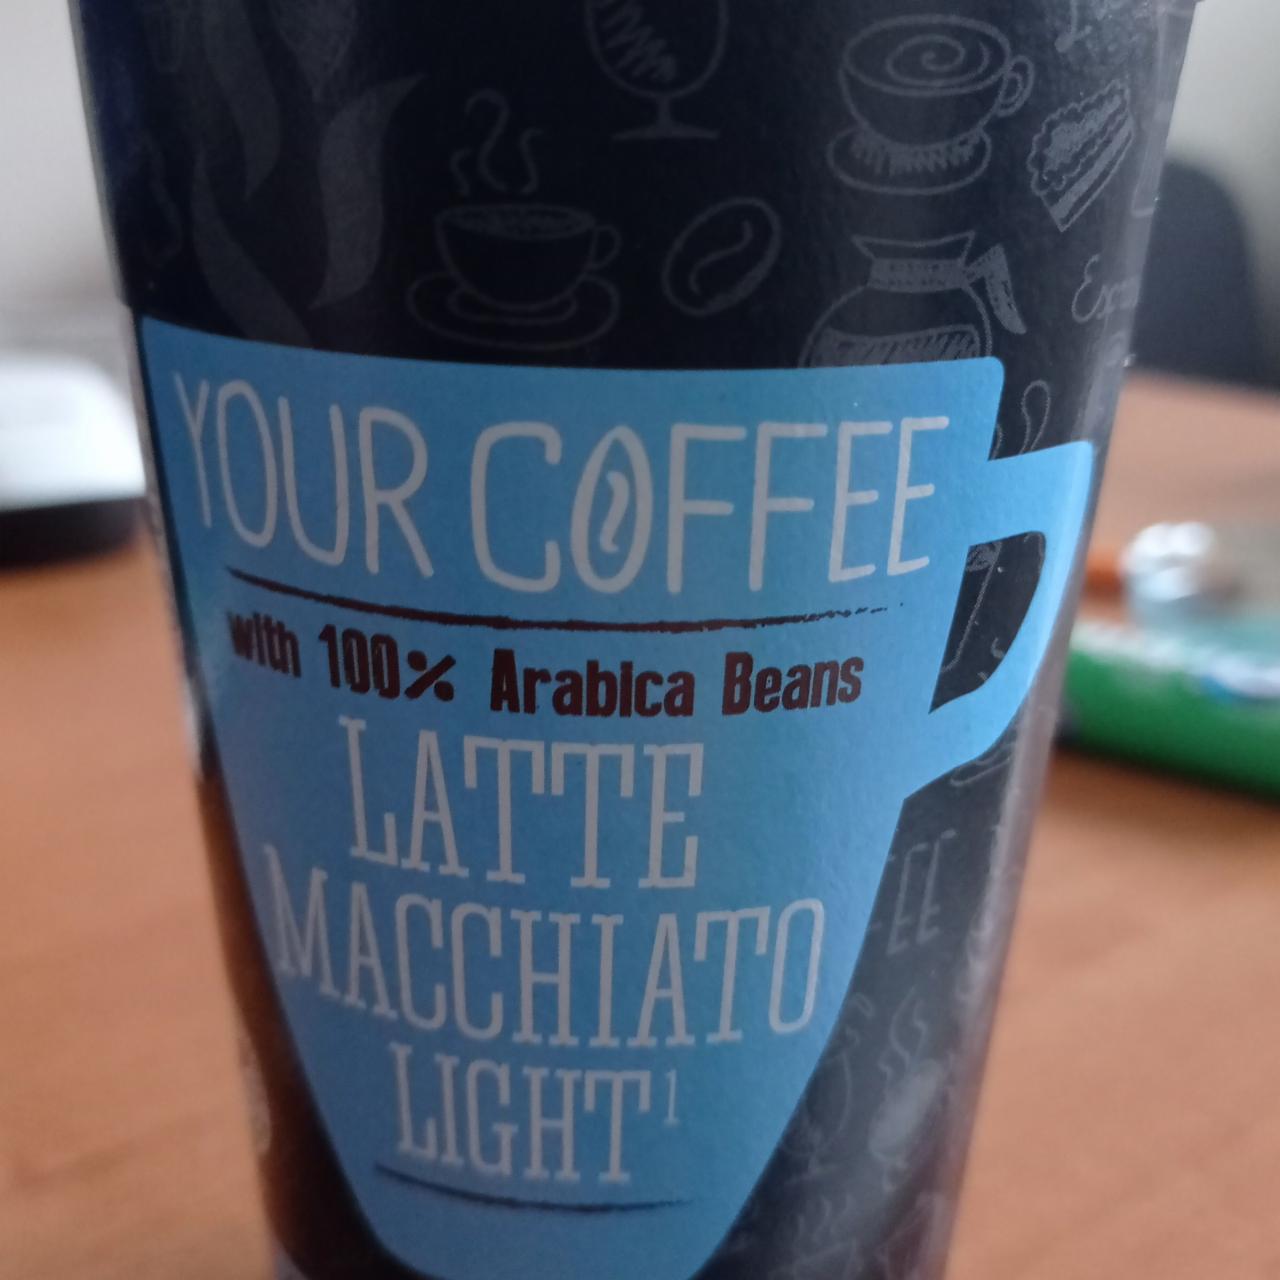 Zdjęcia - Latte macchiato light your coffee